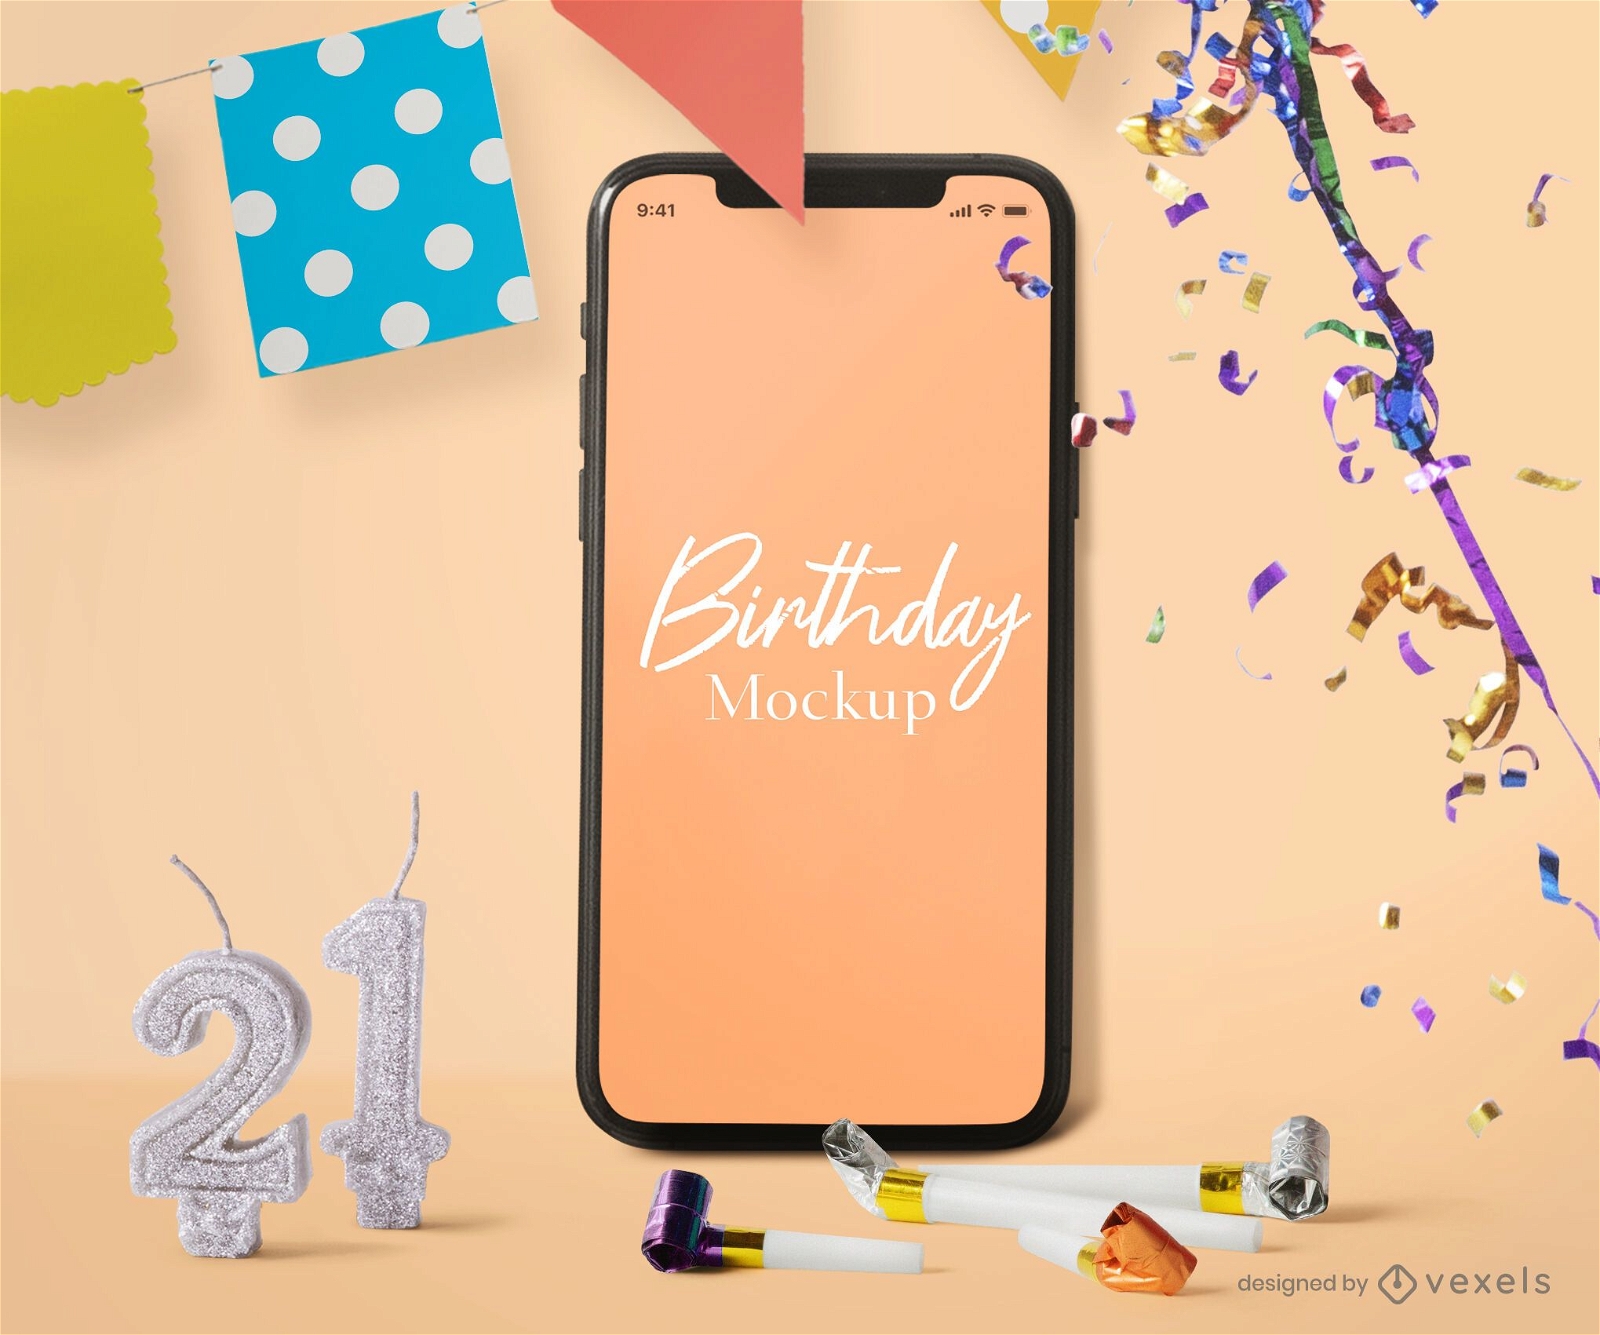 Birthday iphone mockup composition